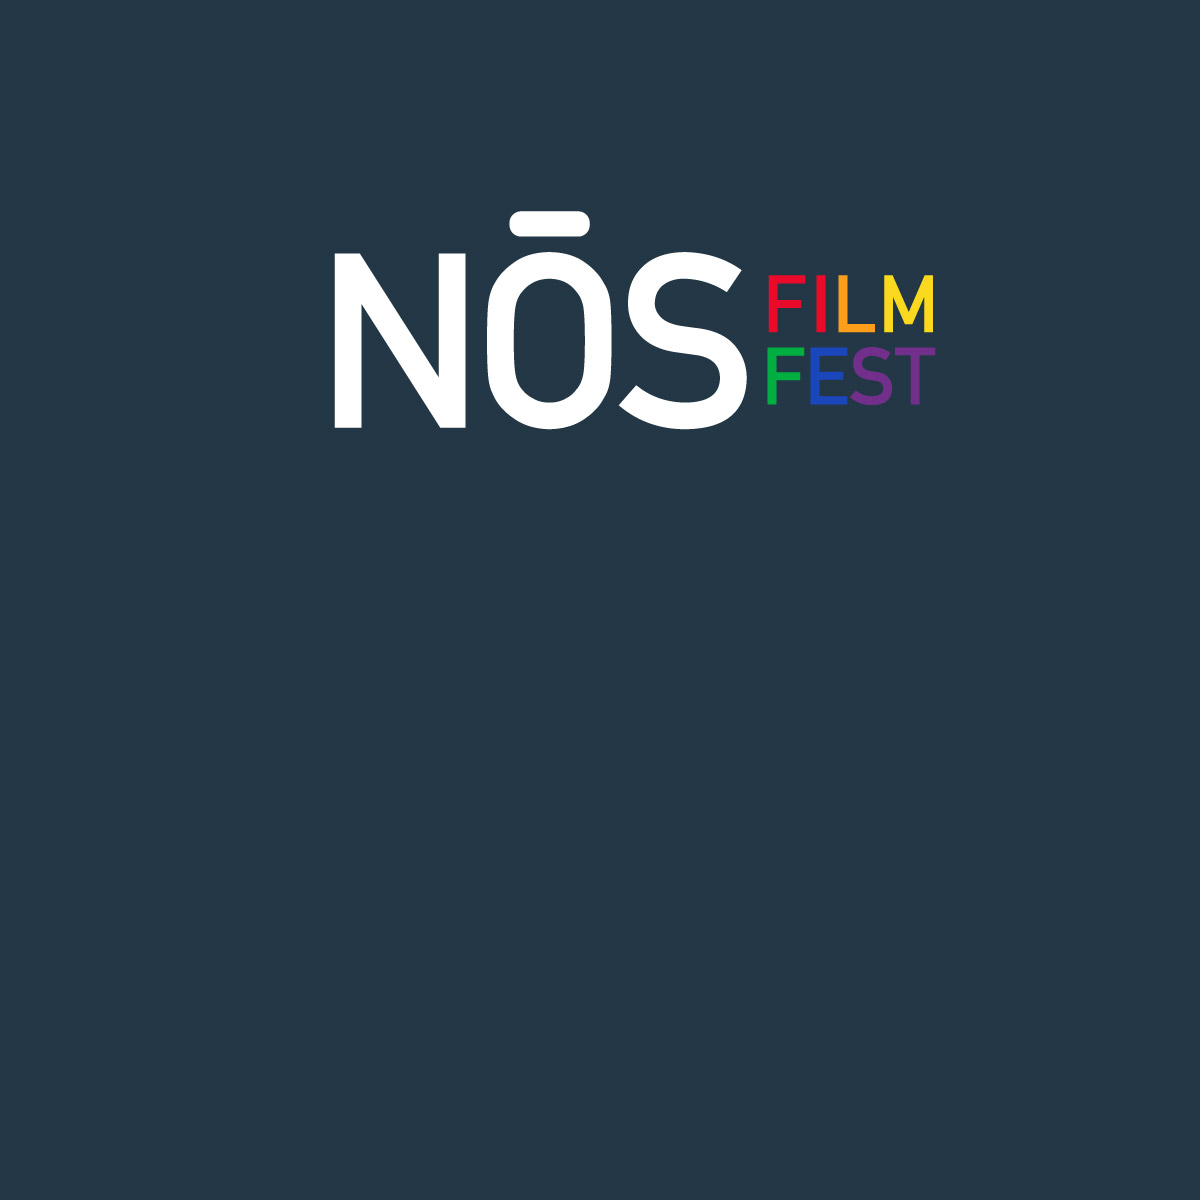 A complete backup of nosfilmfest.org